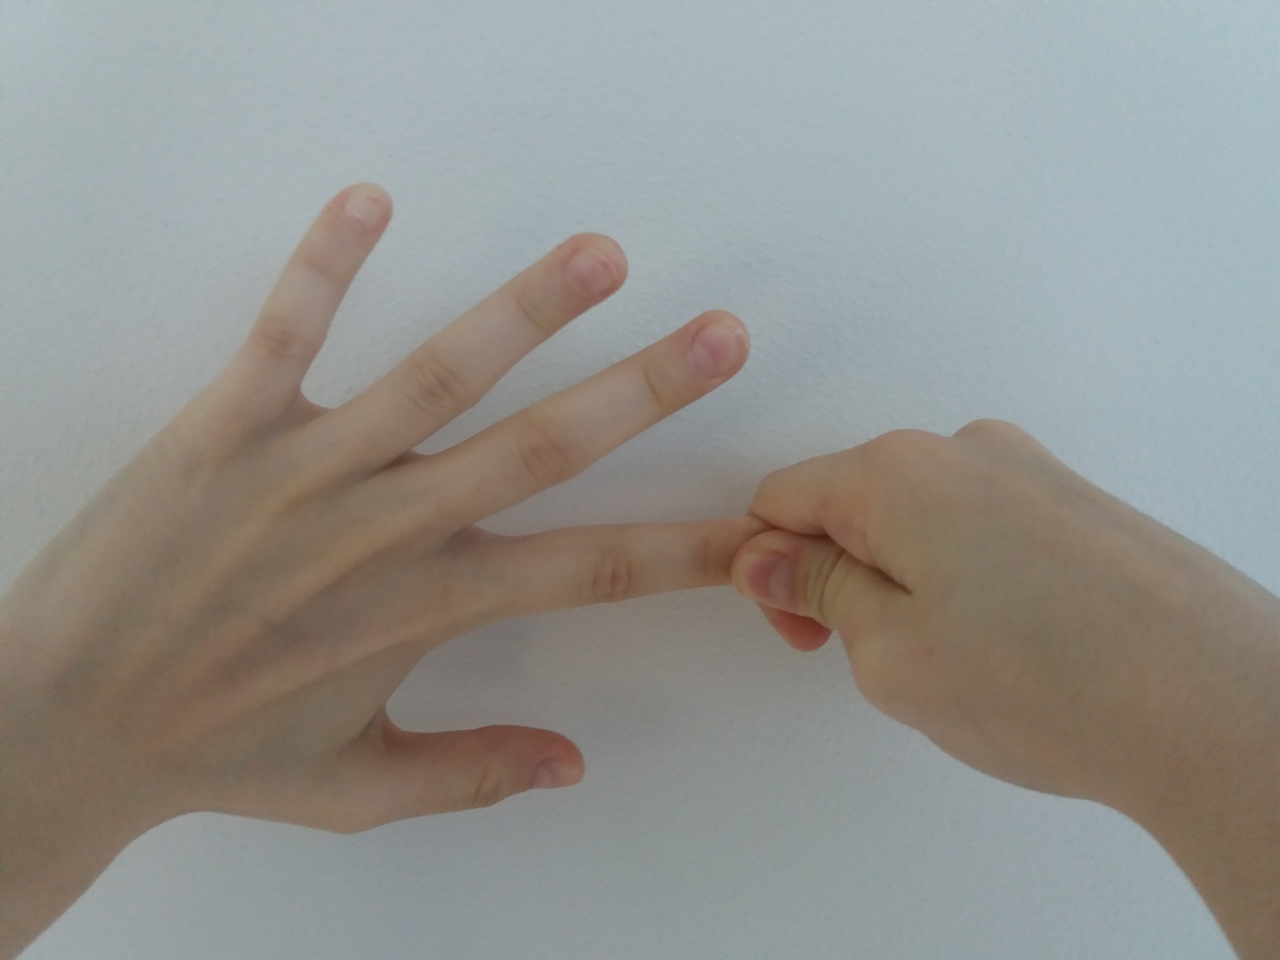 artroza ruce)